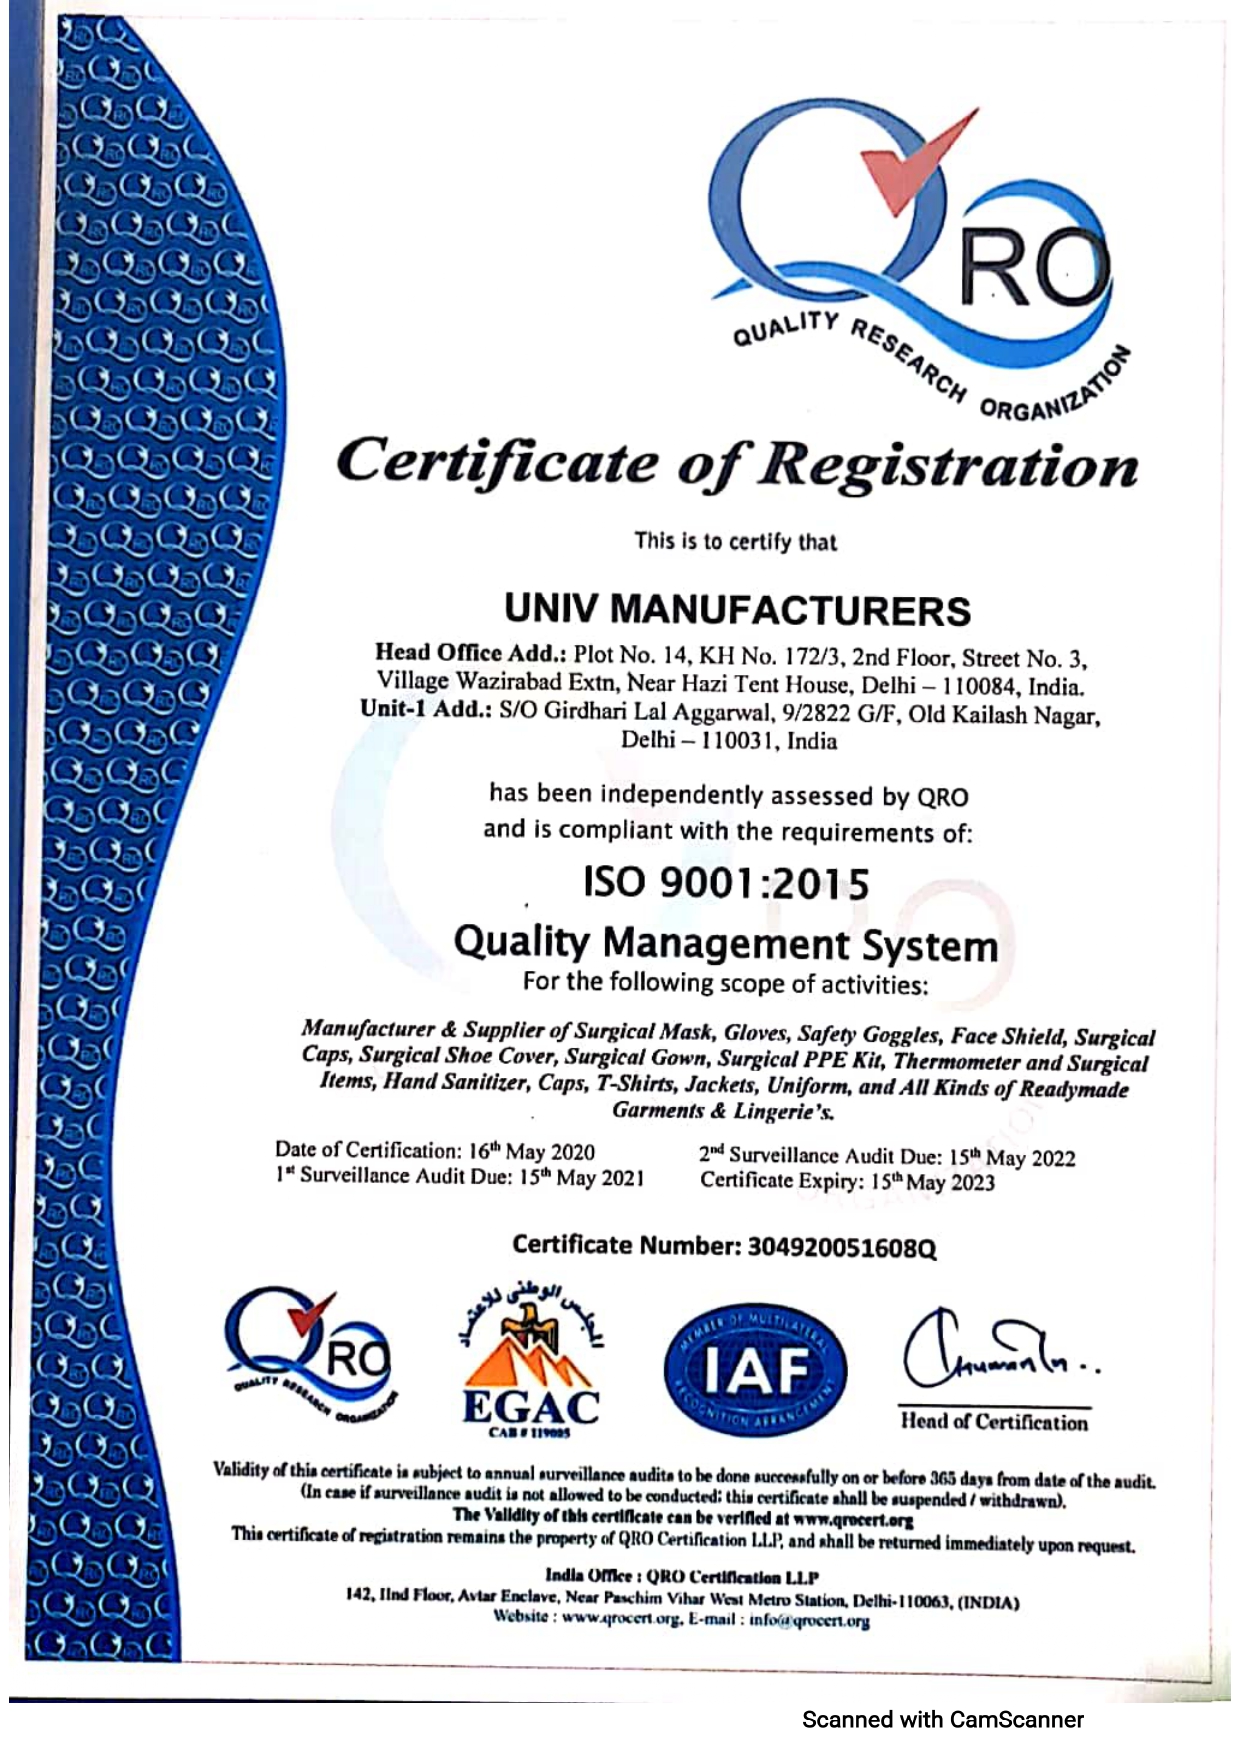 Certificateion of Registration